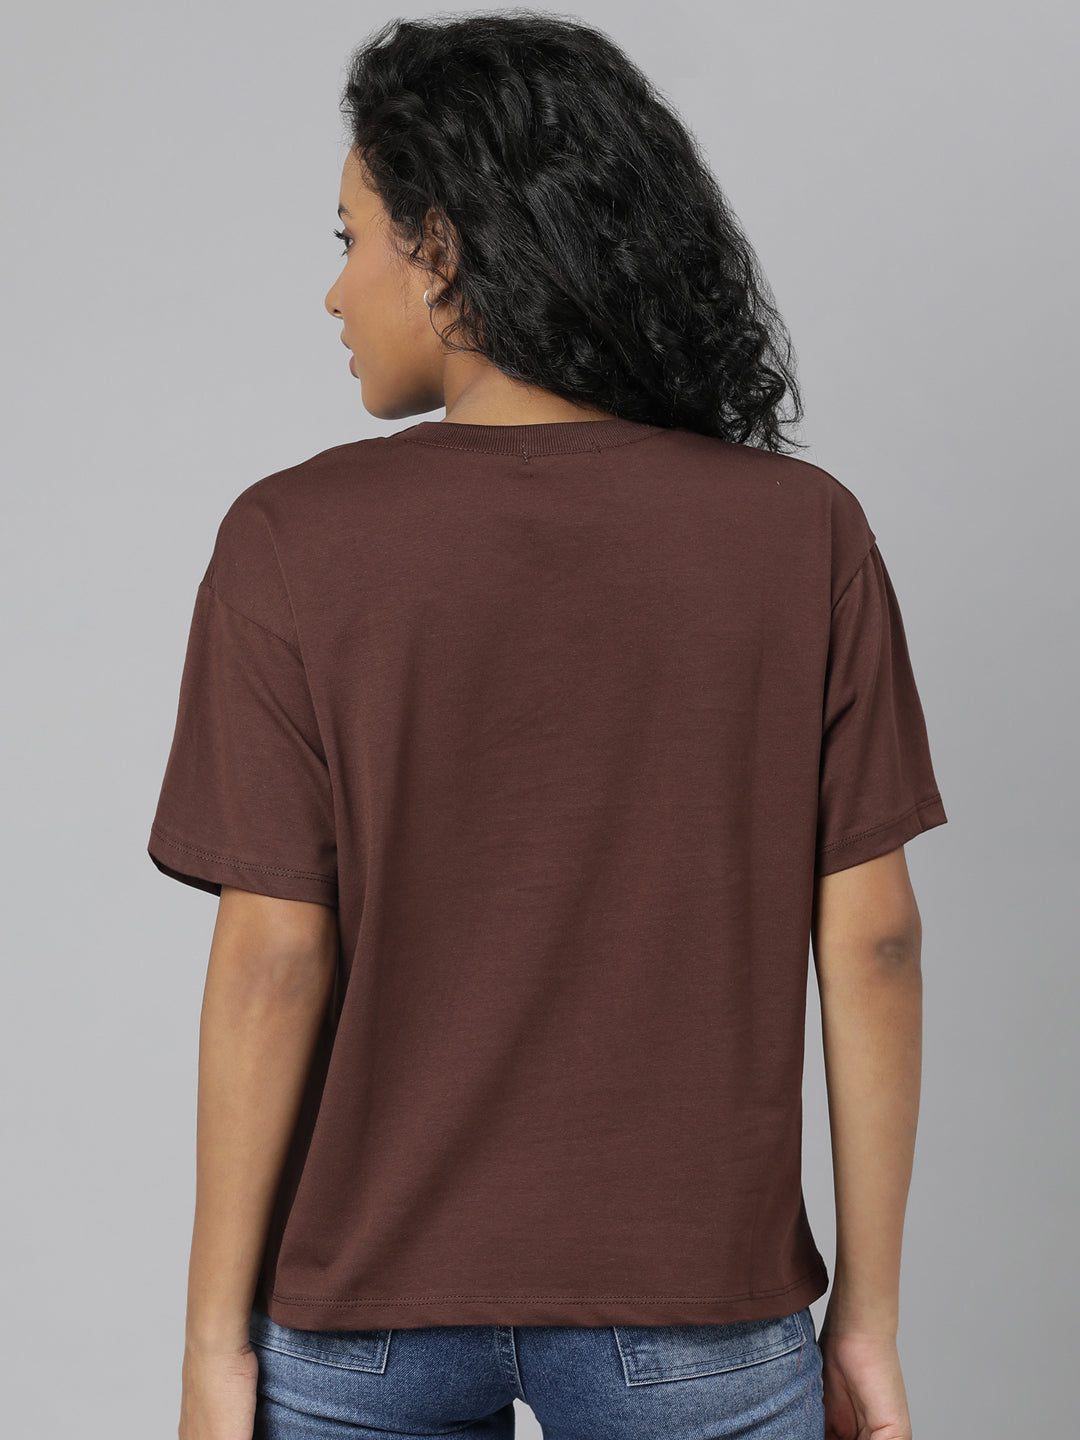 Women Solid Brown T Shirt